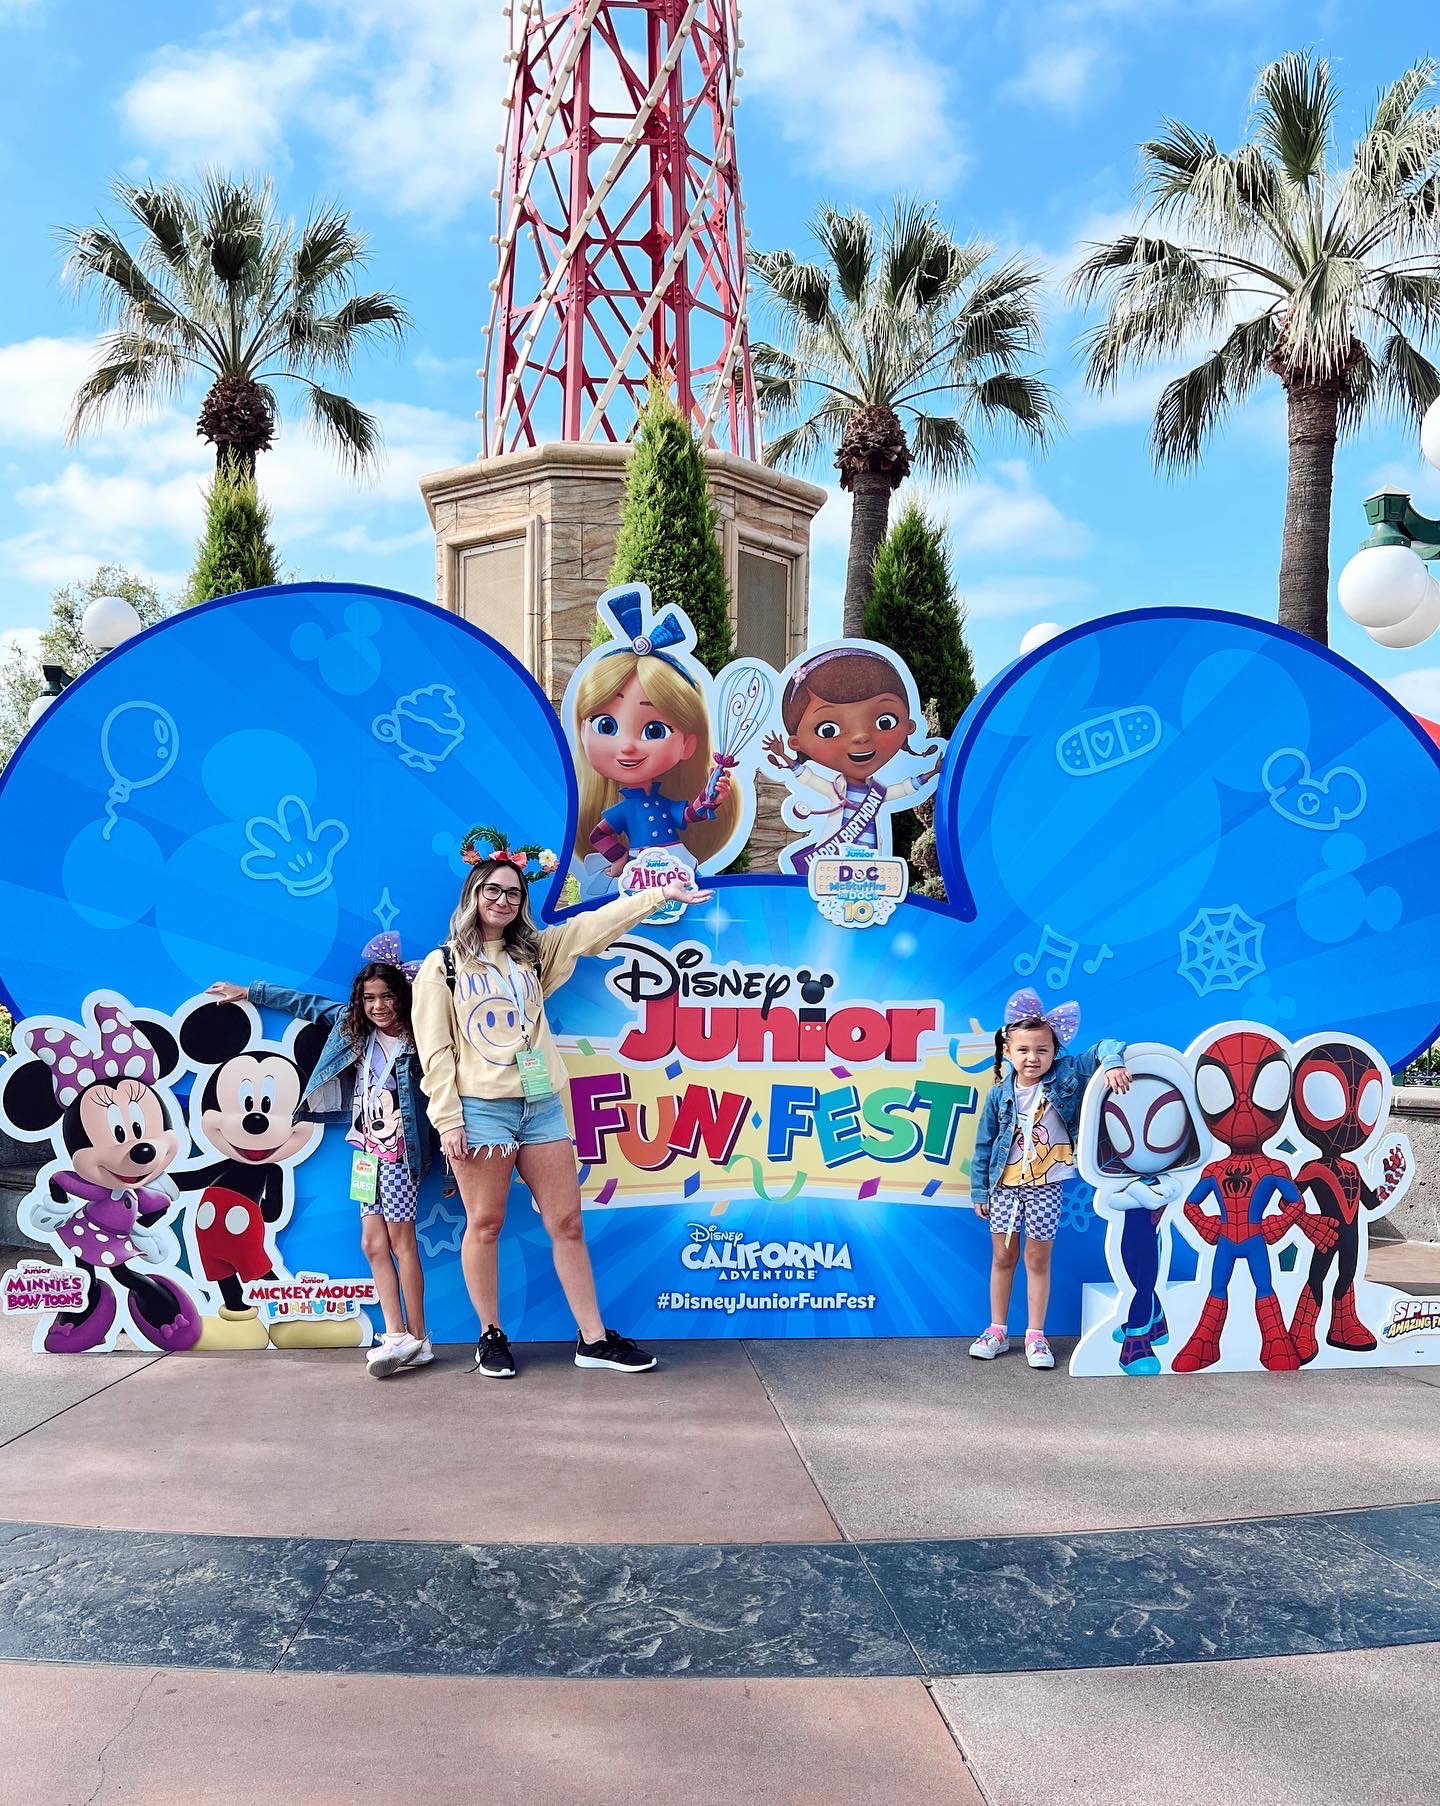 Disney Junior Fun Fest at Disney Parks and a Sneak Peak at All New